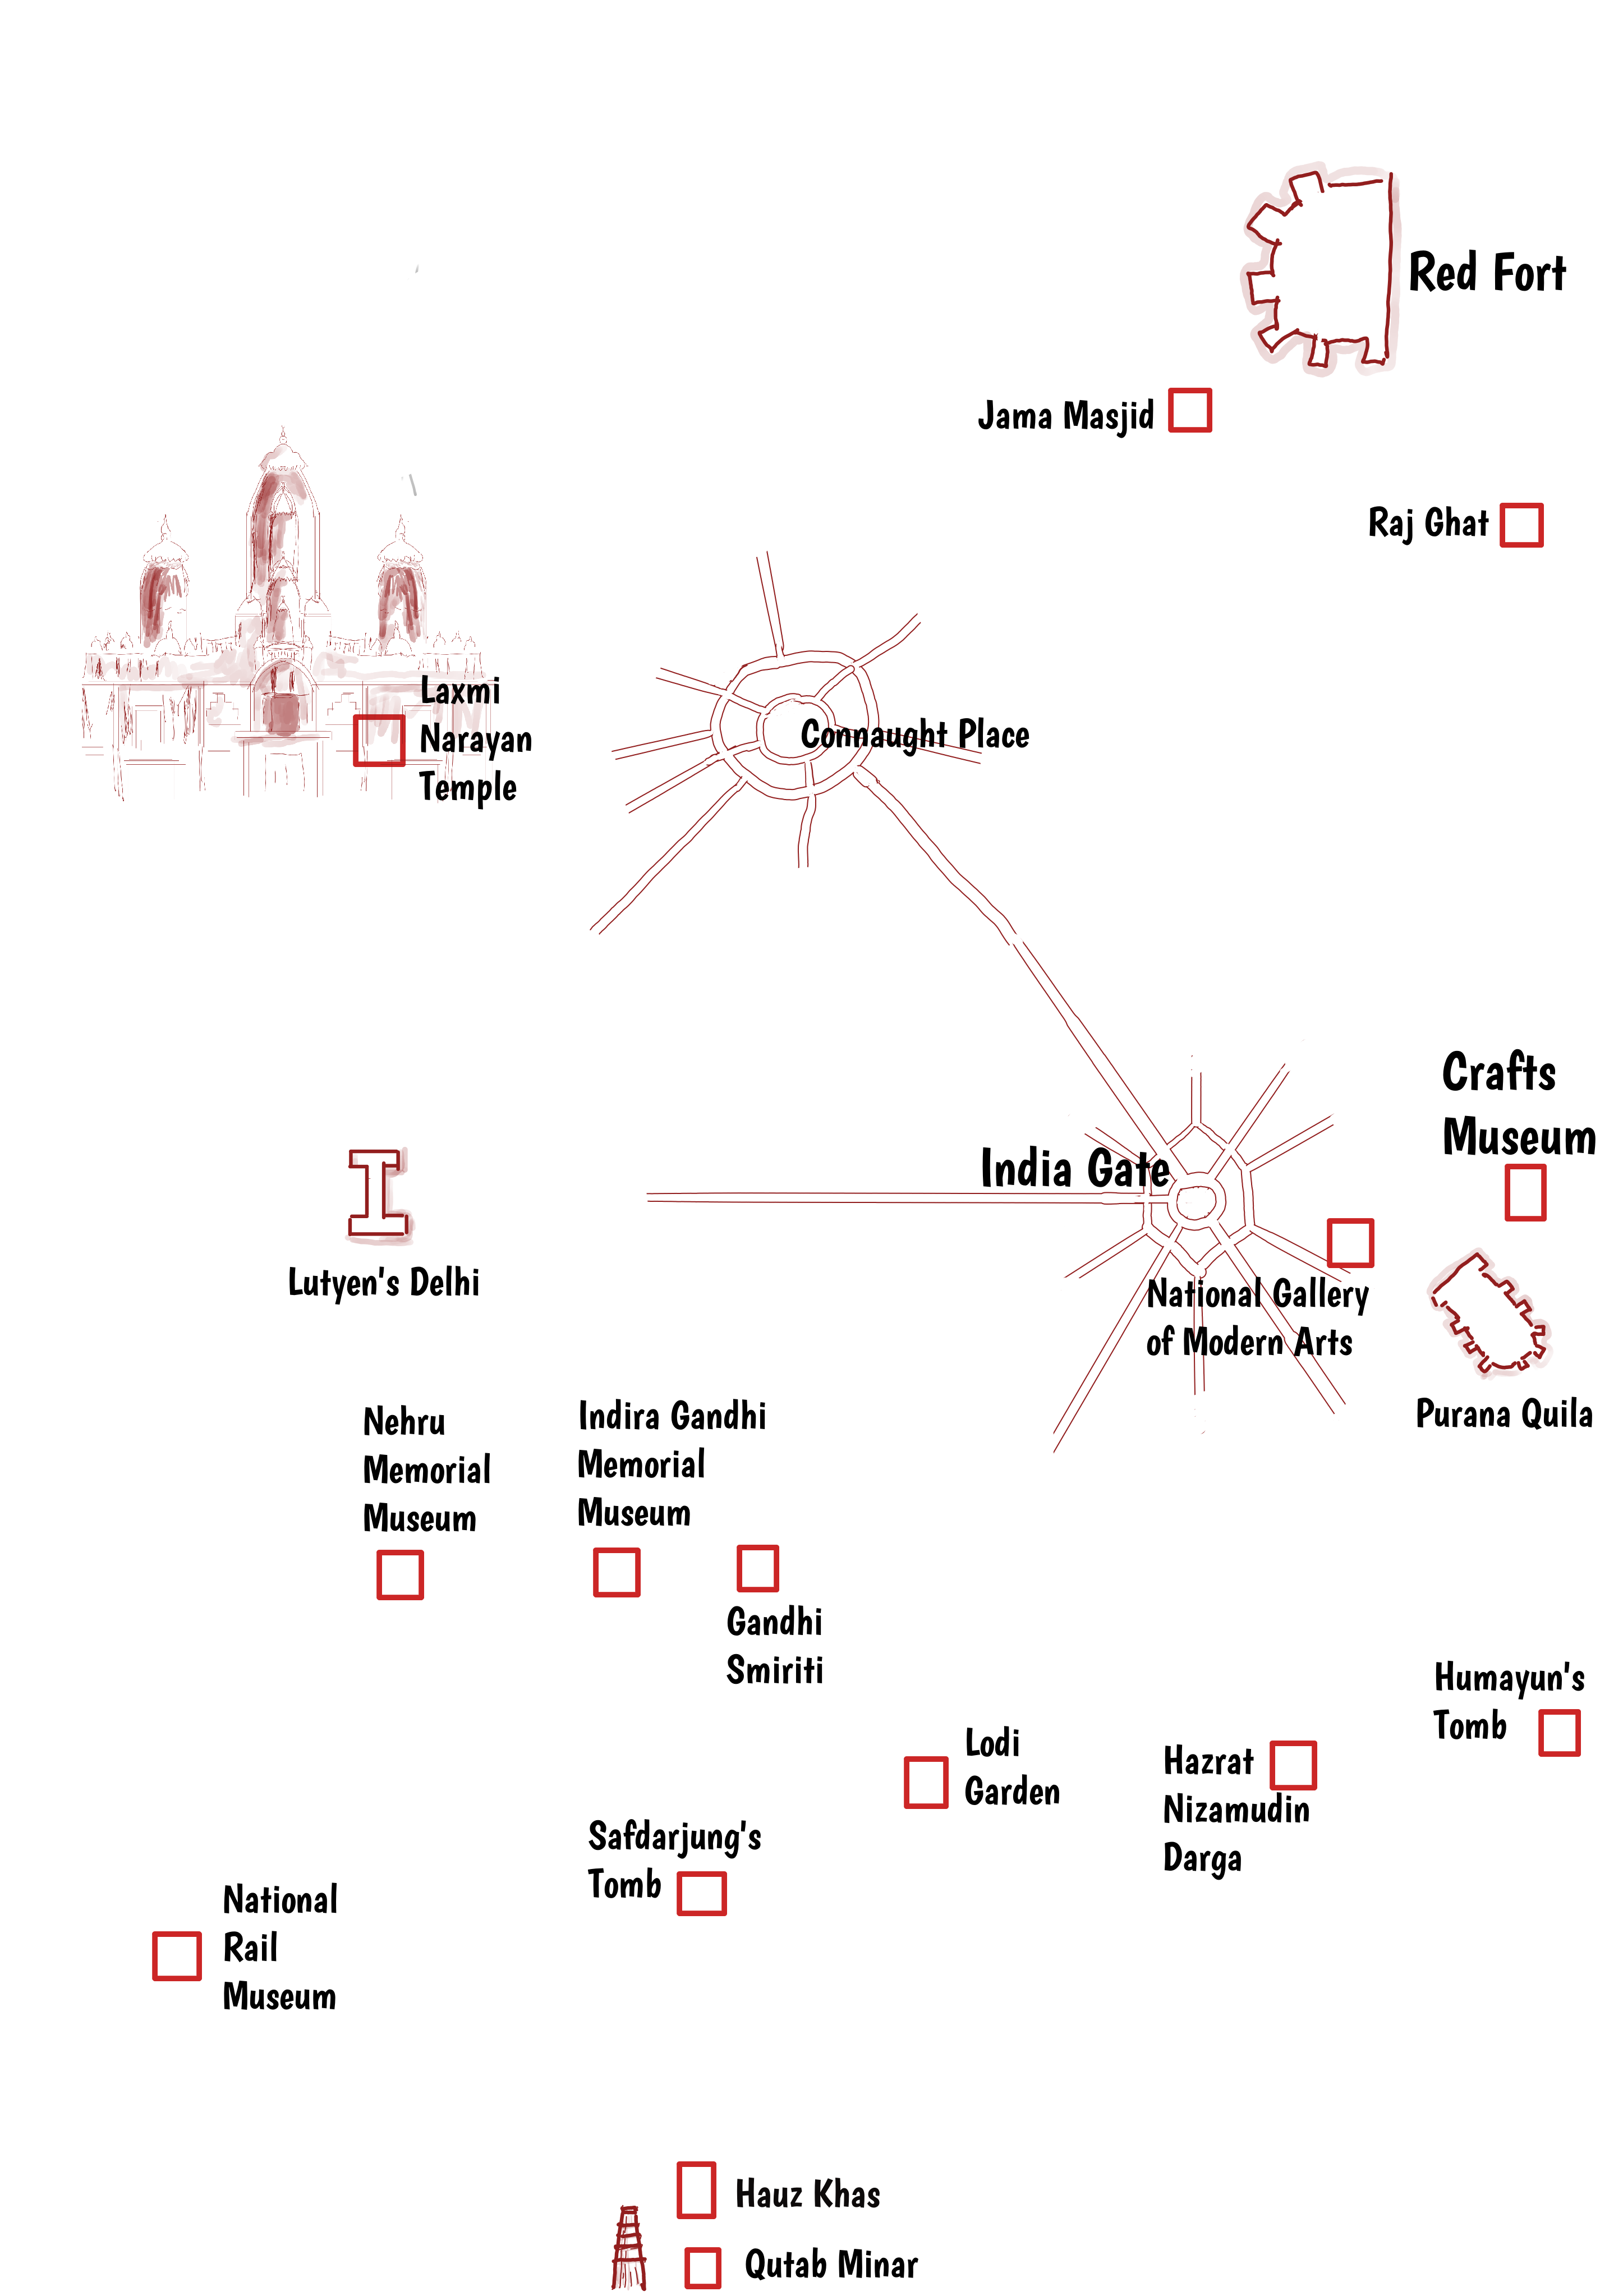 Major Tourism attractions in Old Delhi & New Delhi